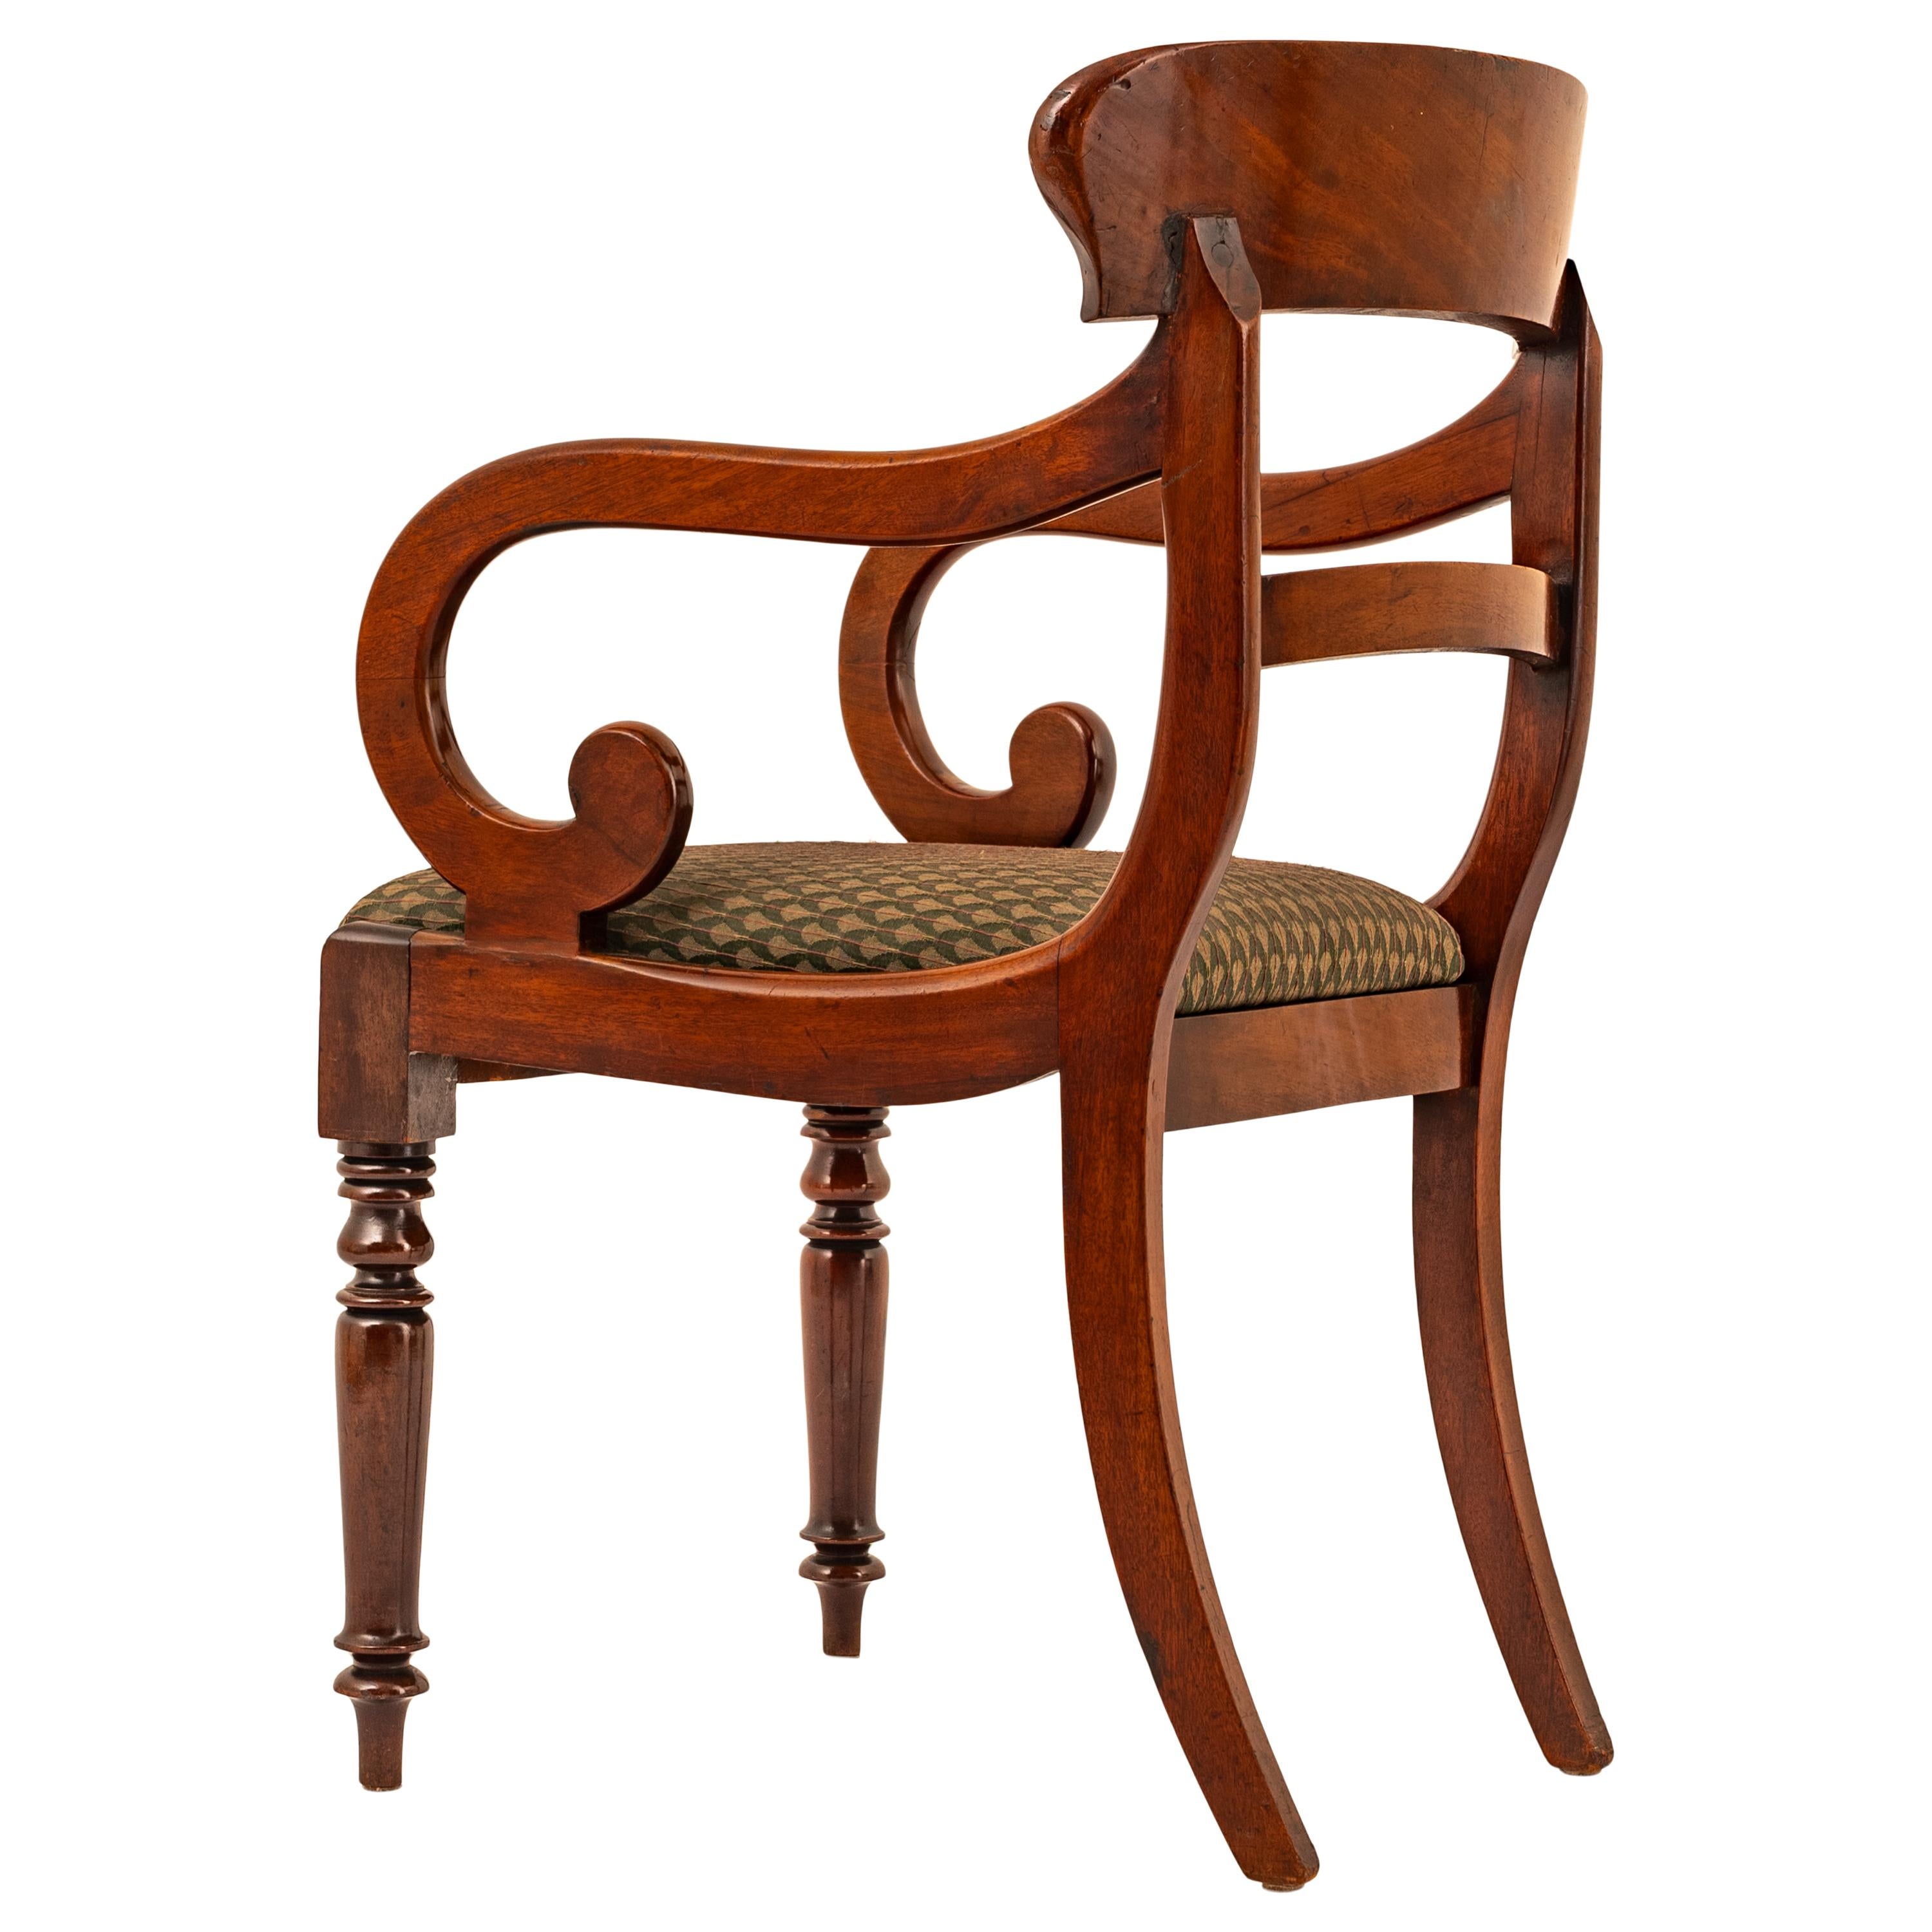 Antique 19th Century Georgian Regency Mahogany Armchair Library Desk Chair 1820 For Sale 1